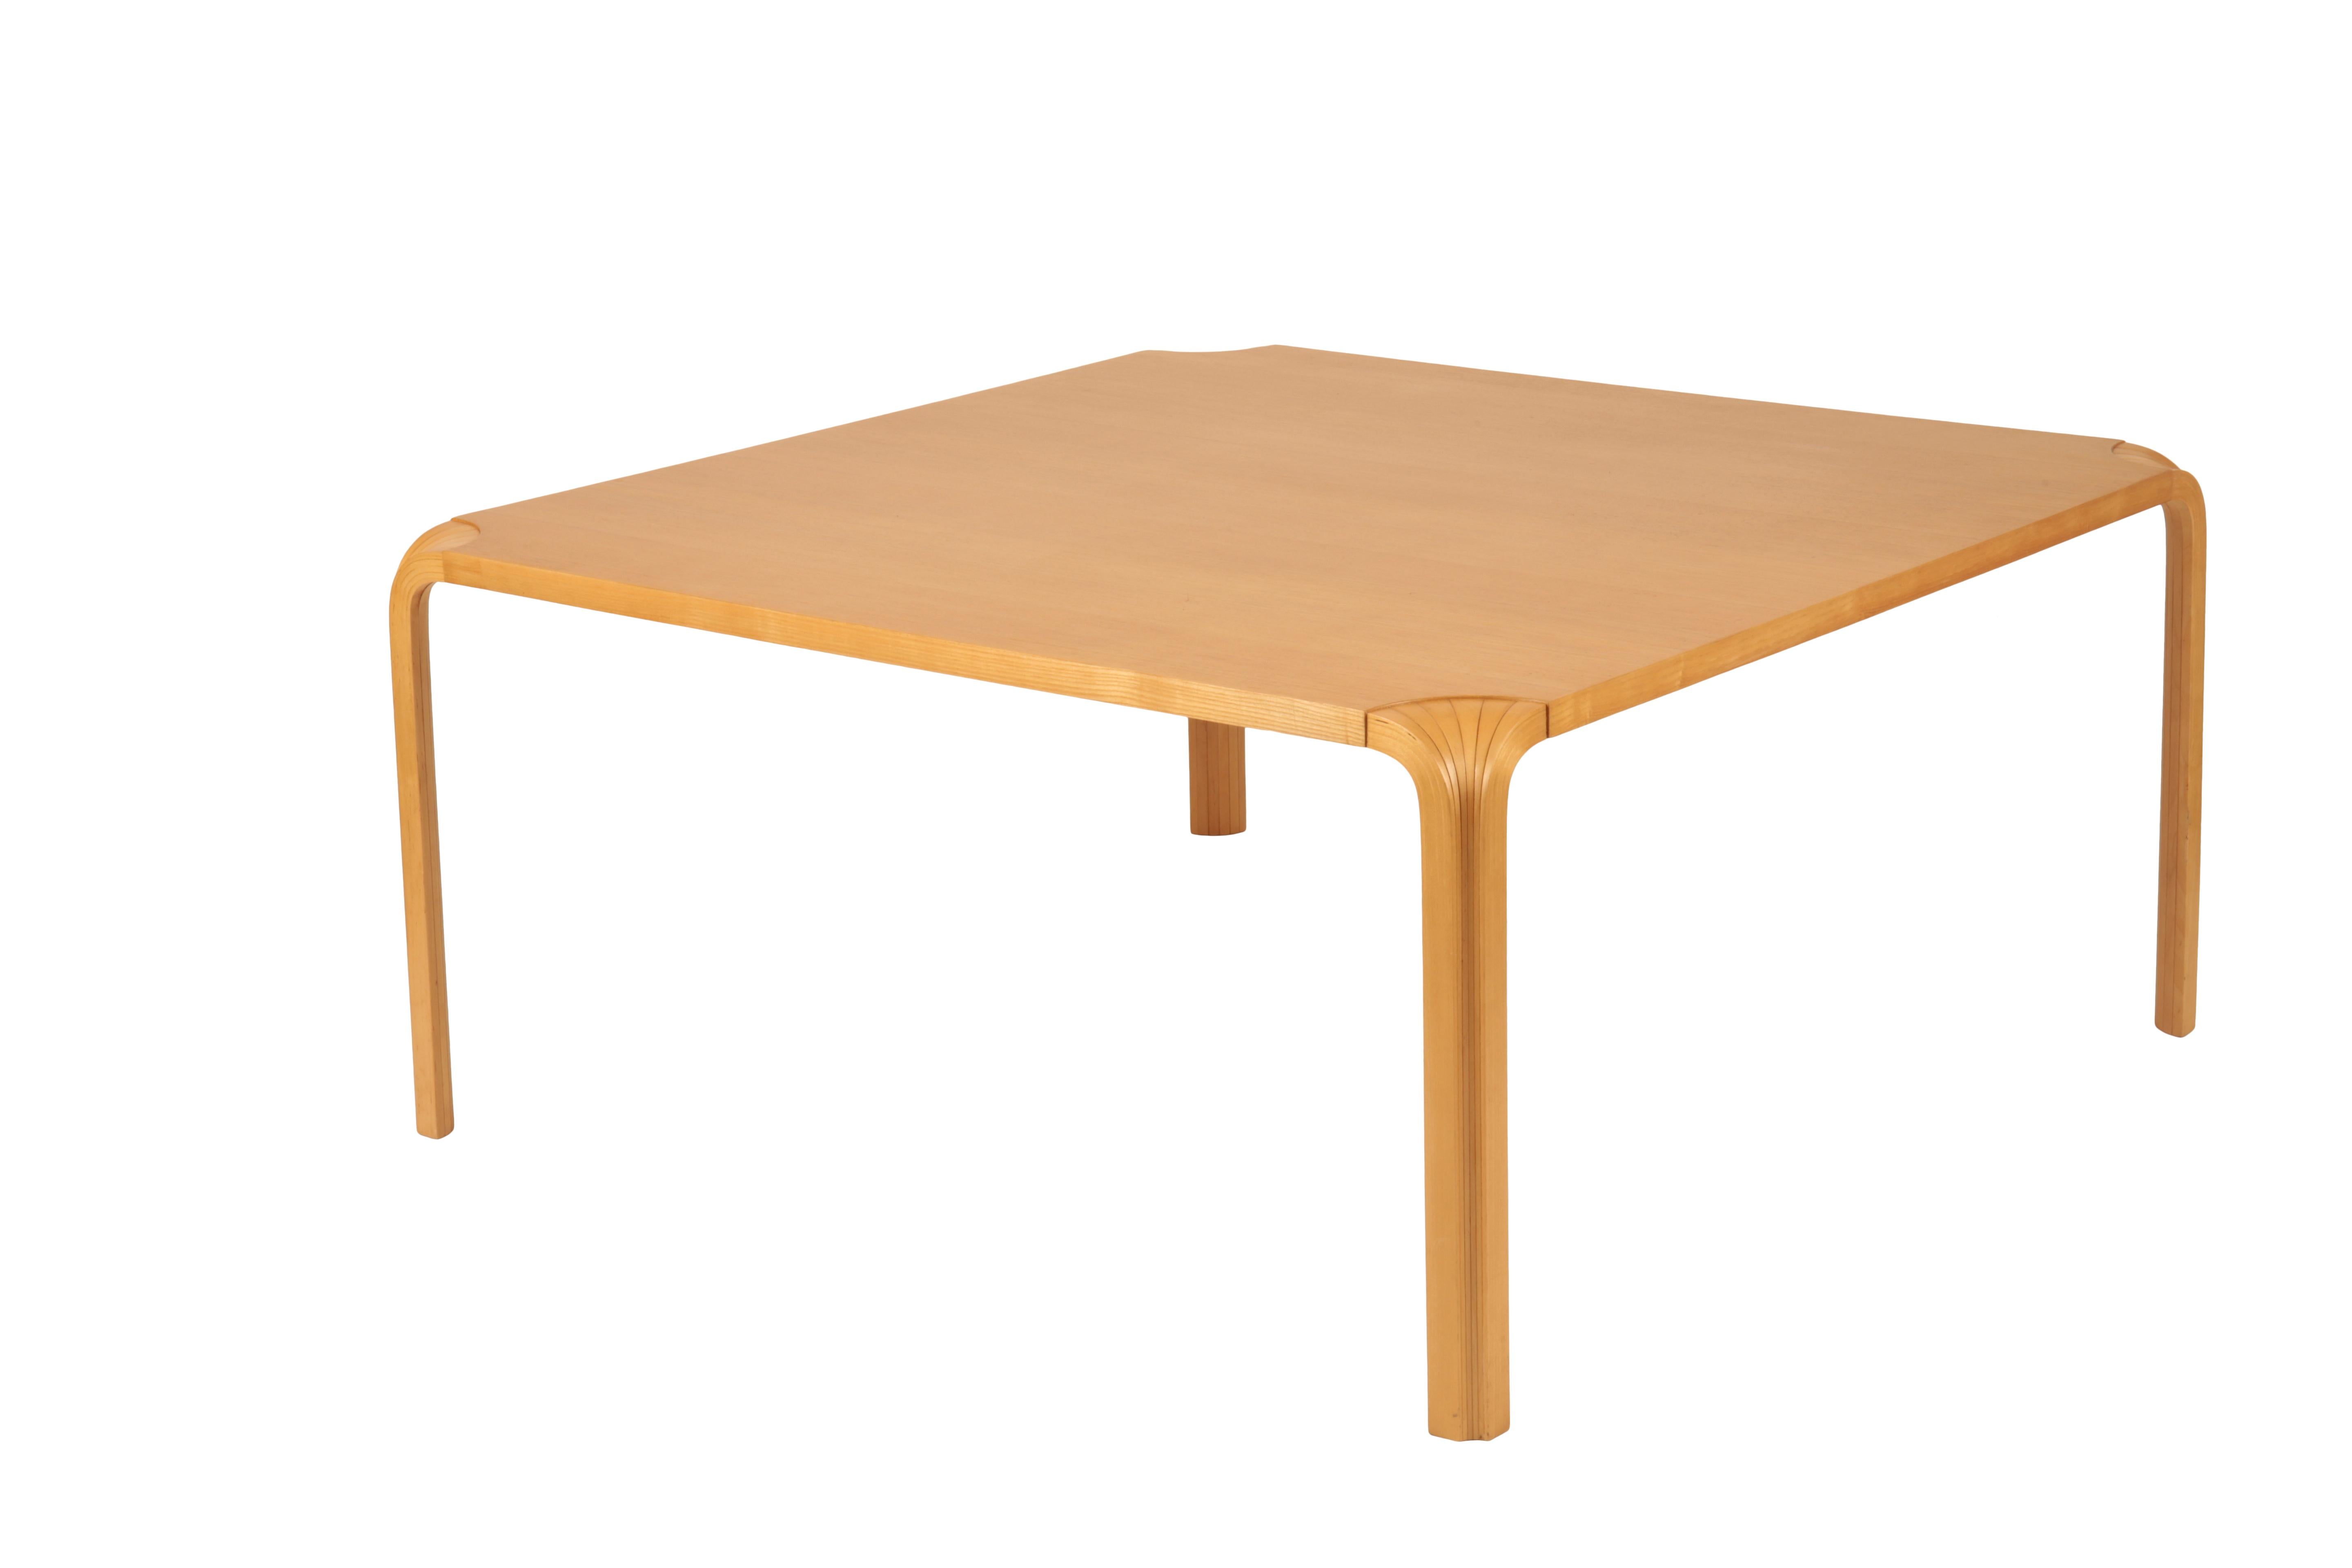 Hugo Alvar Henrik Aalto (1898-1976)
Impressive large occasional table with fan leg design, Produced for Artek  introduced in 1954 ash top with birch legs.
Measures: 120 cm sq x 57 cm high
circa 1960
Finnish.